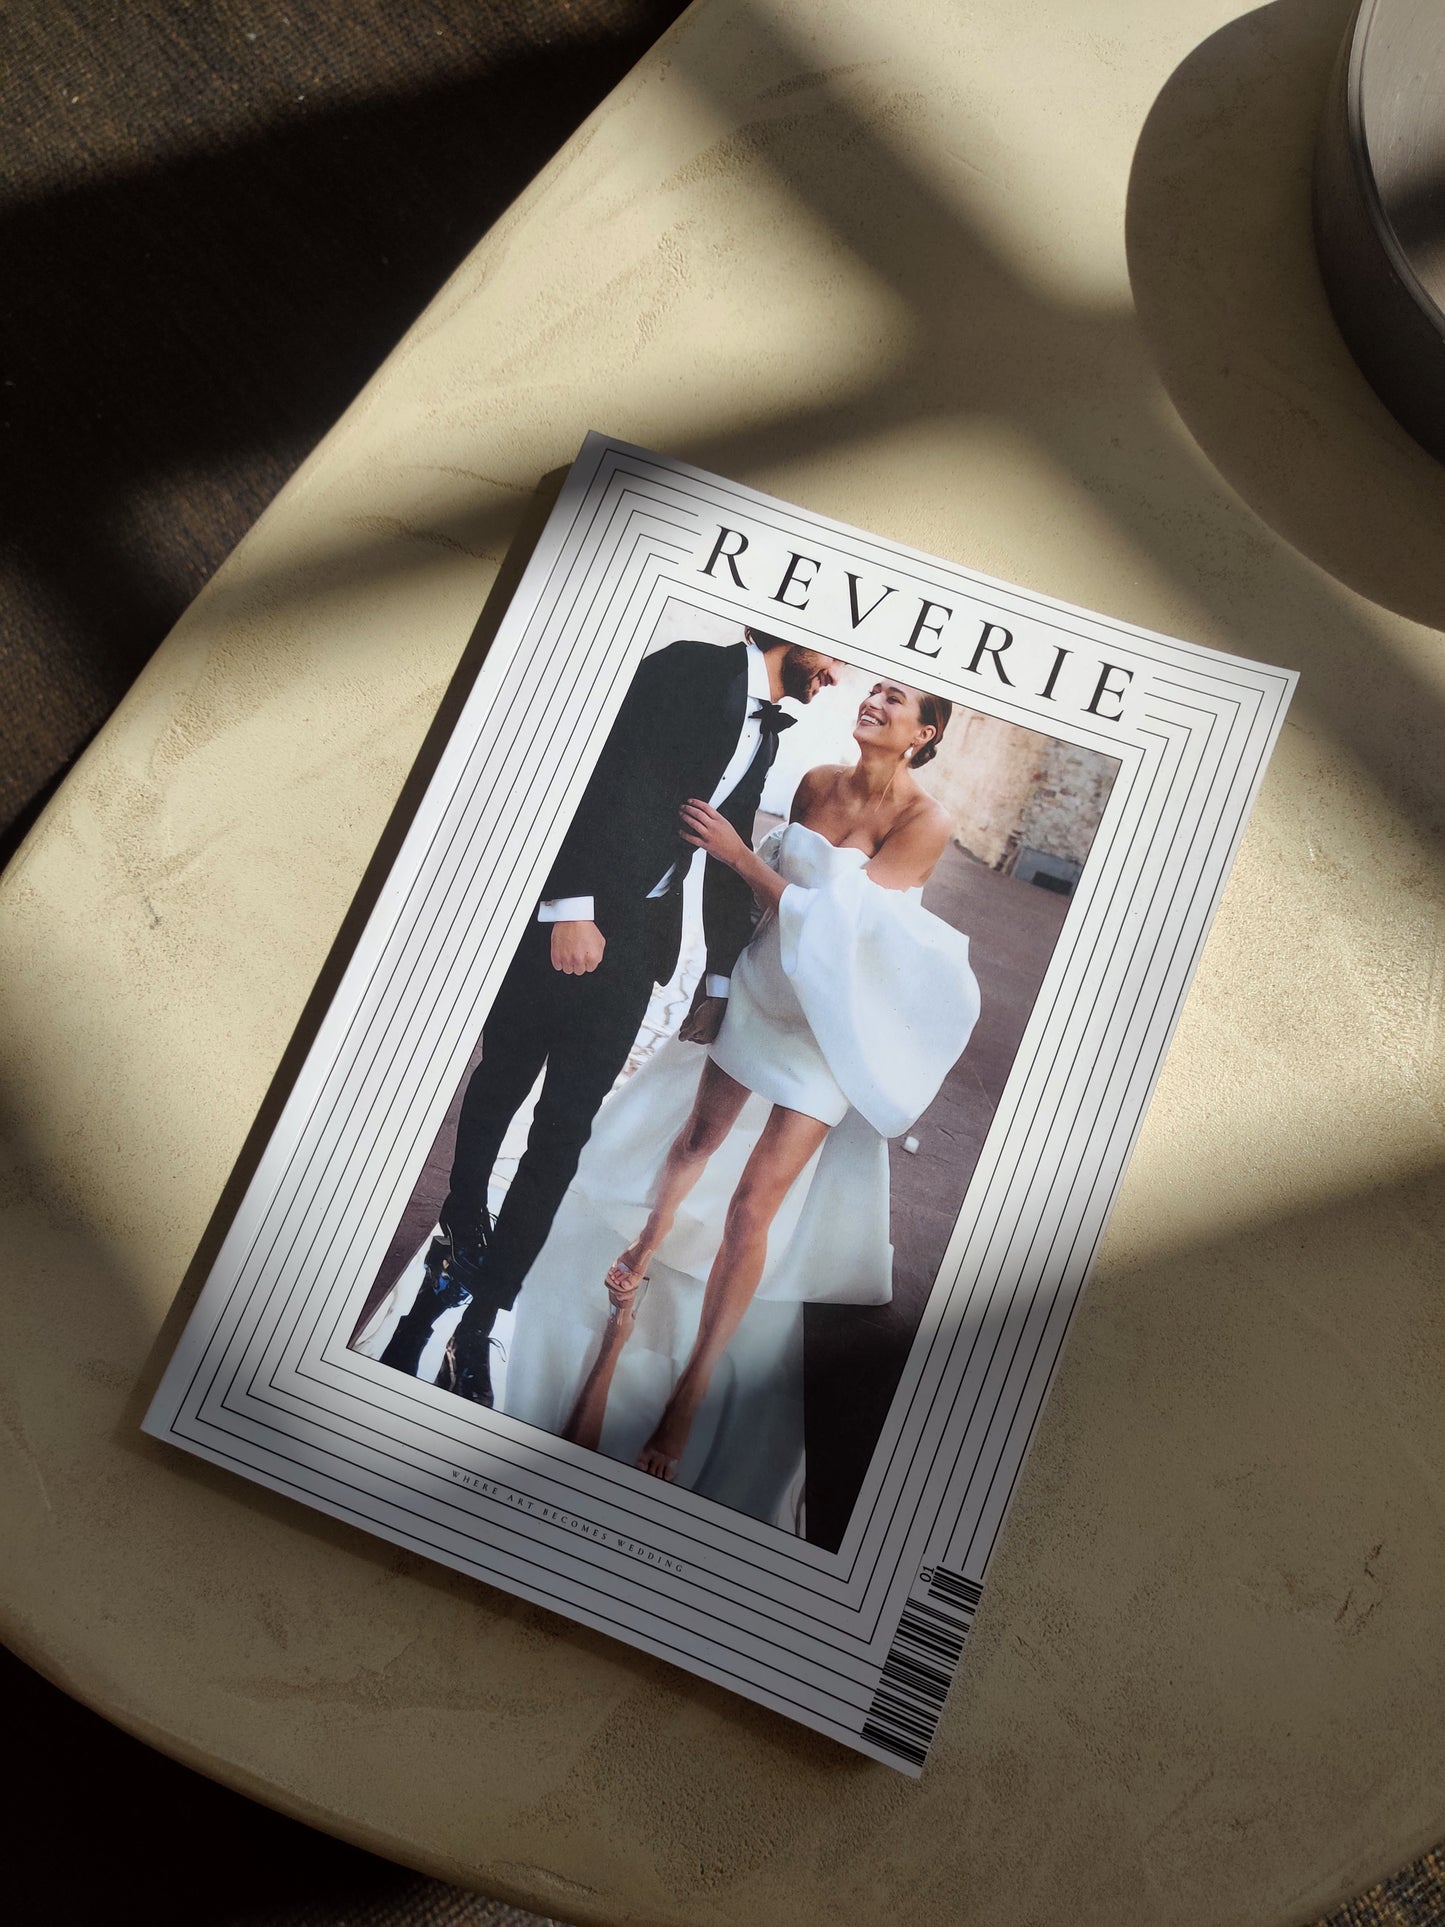 REVERIE Magazine Issue #1